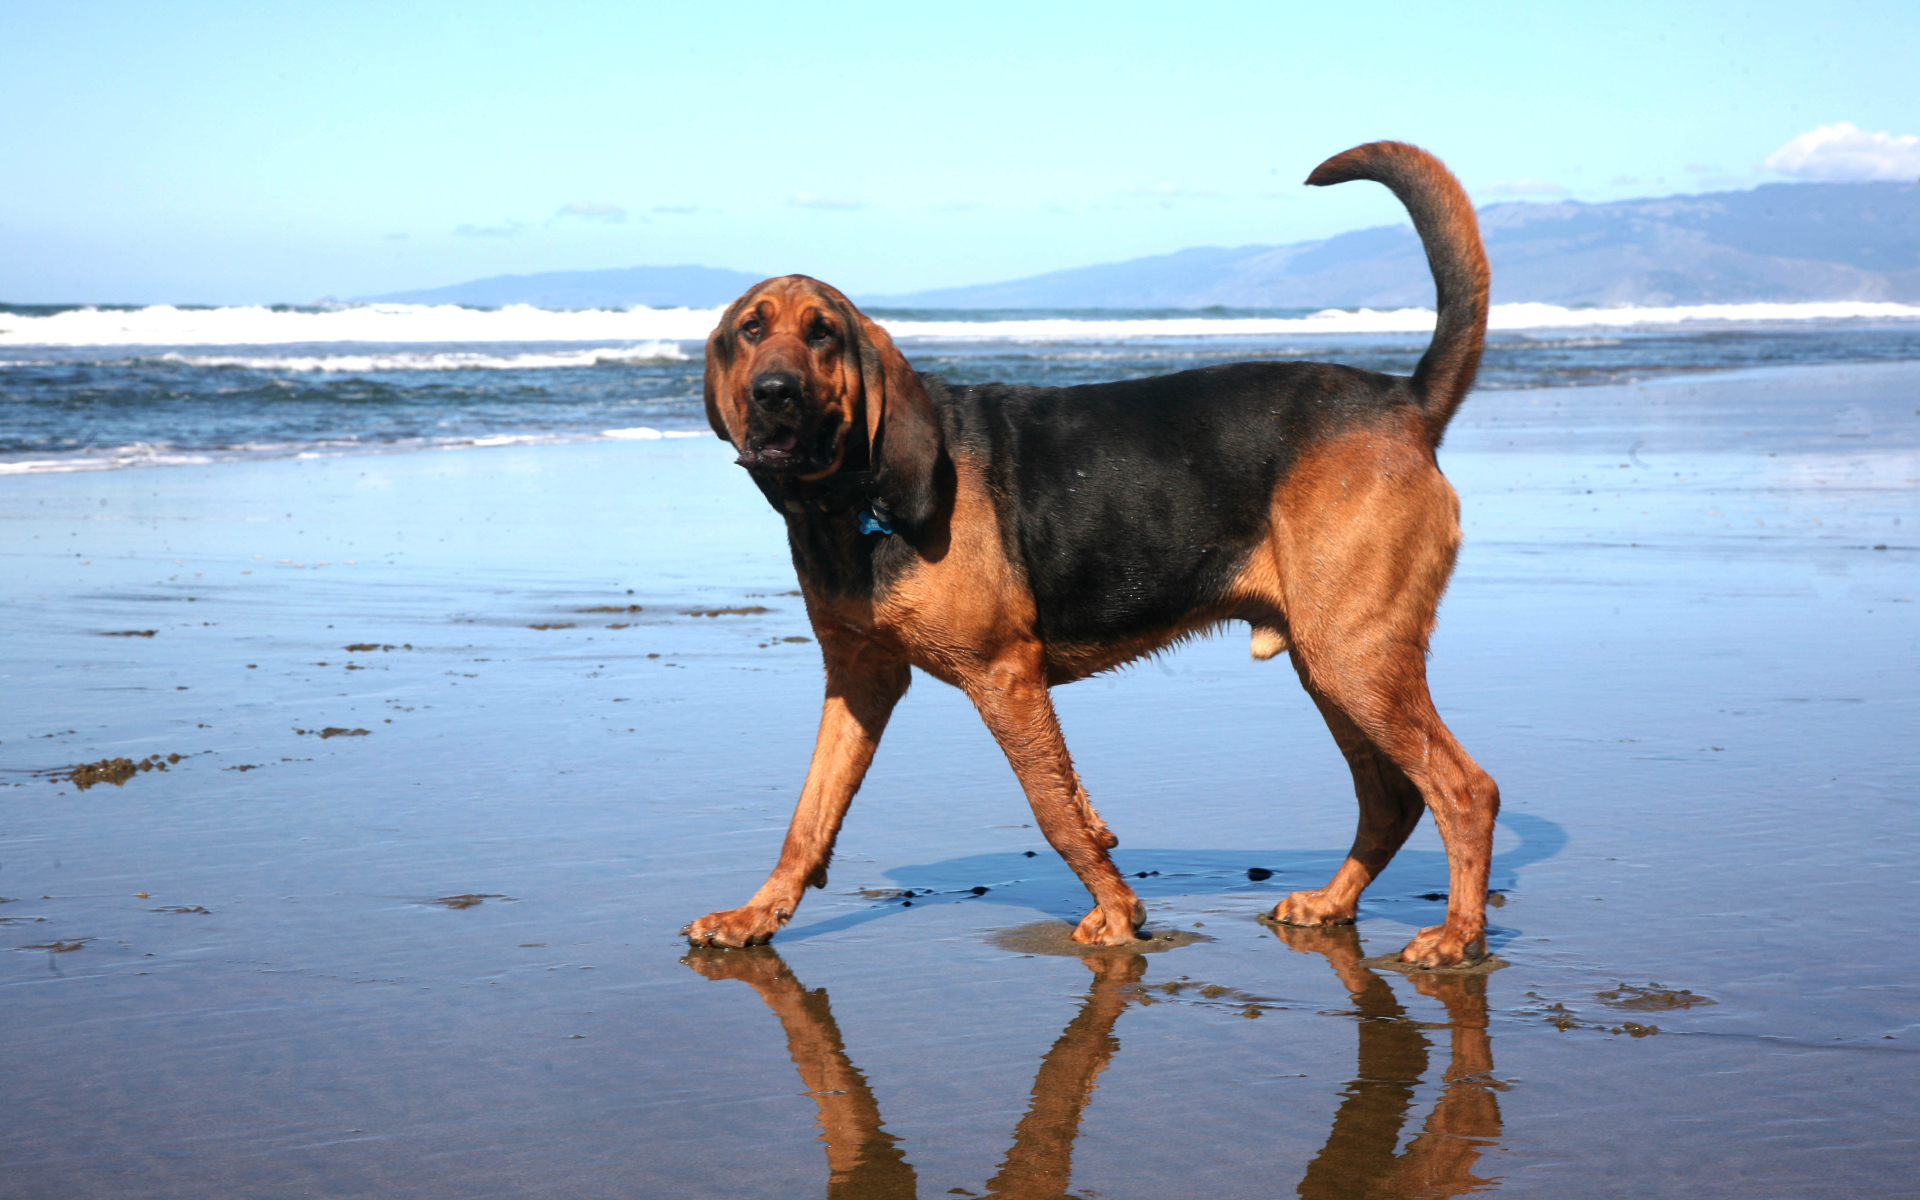 Bloodhound is walking on water